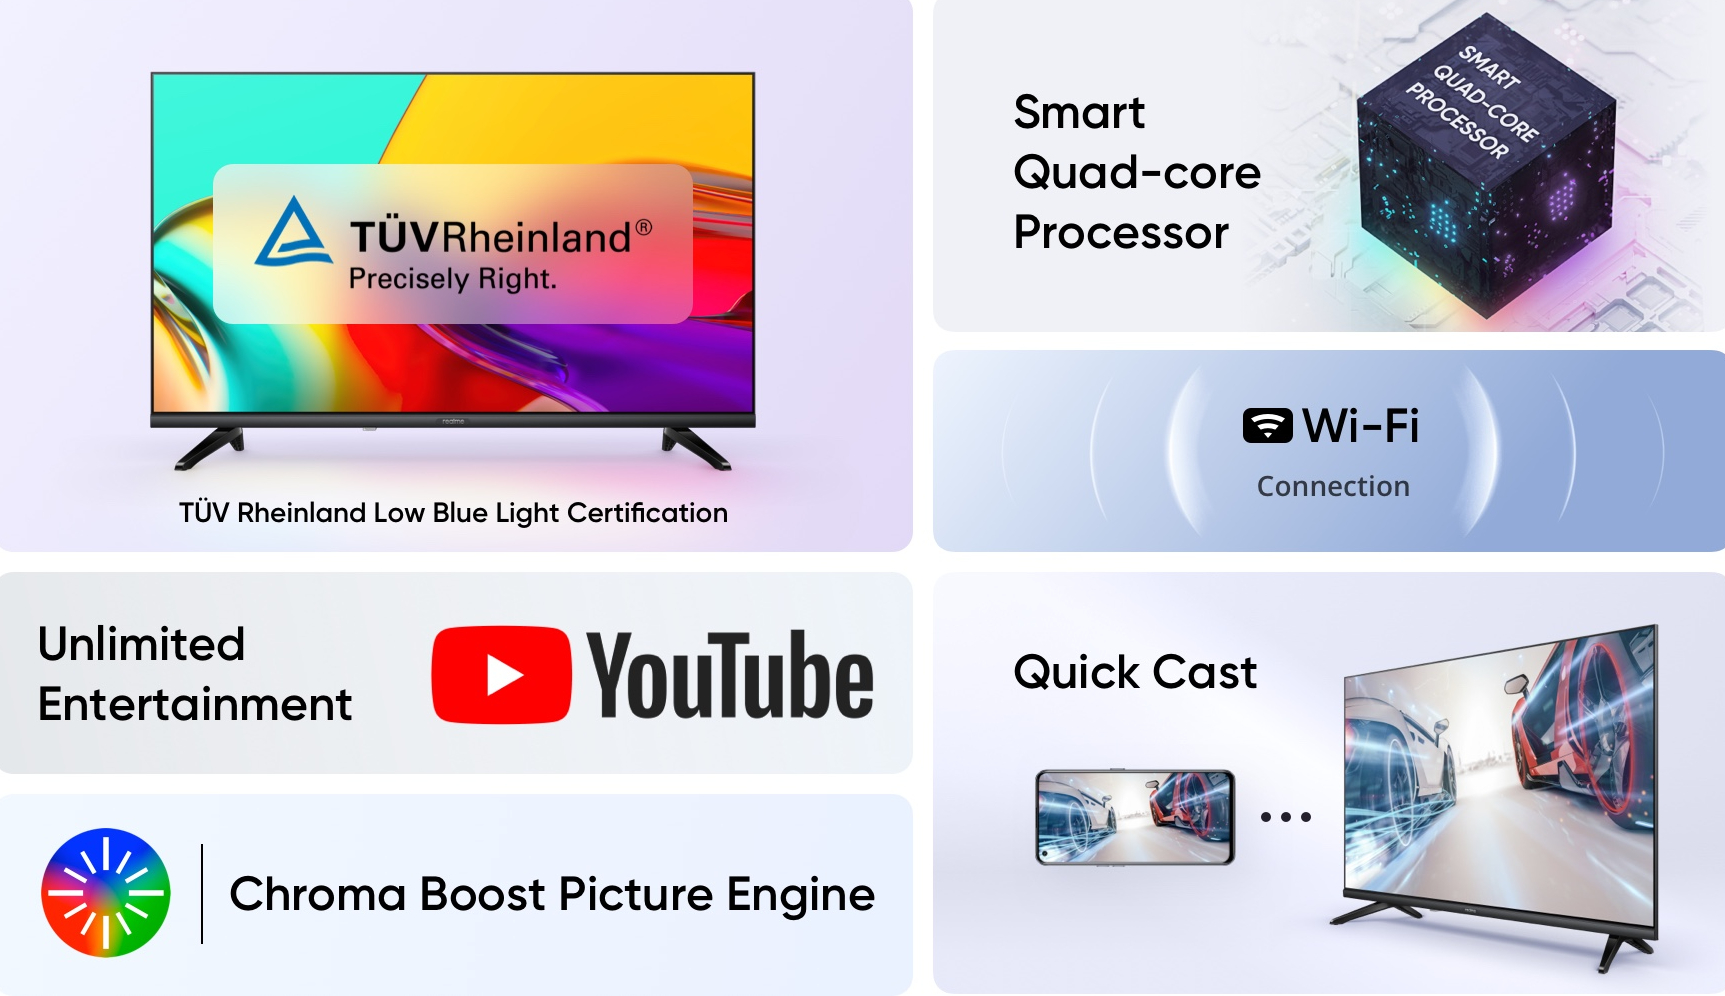 realme Smart TV Neo 32 Features